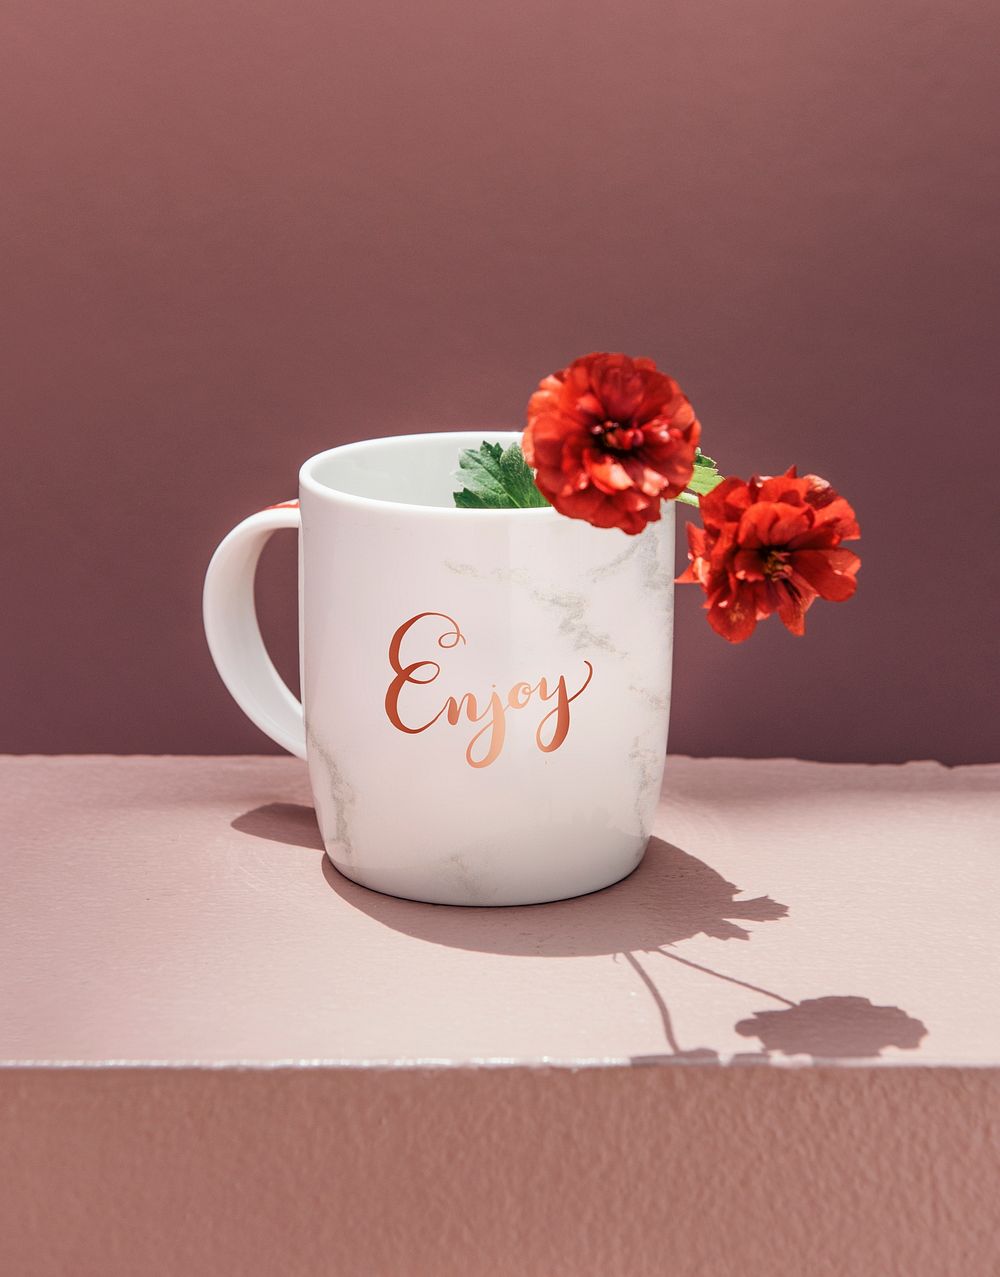 Red peony in a coffee mug